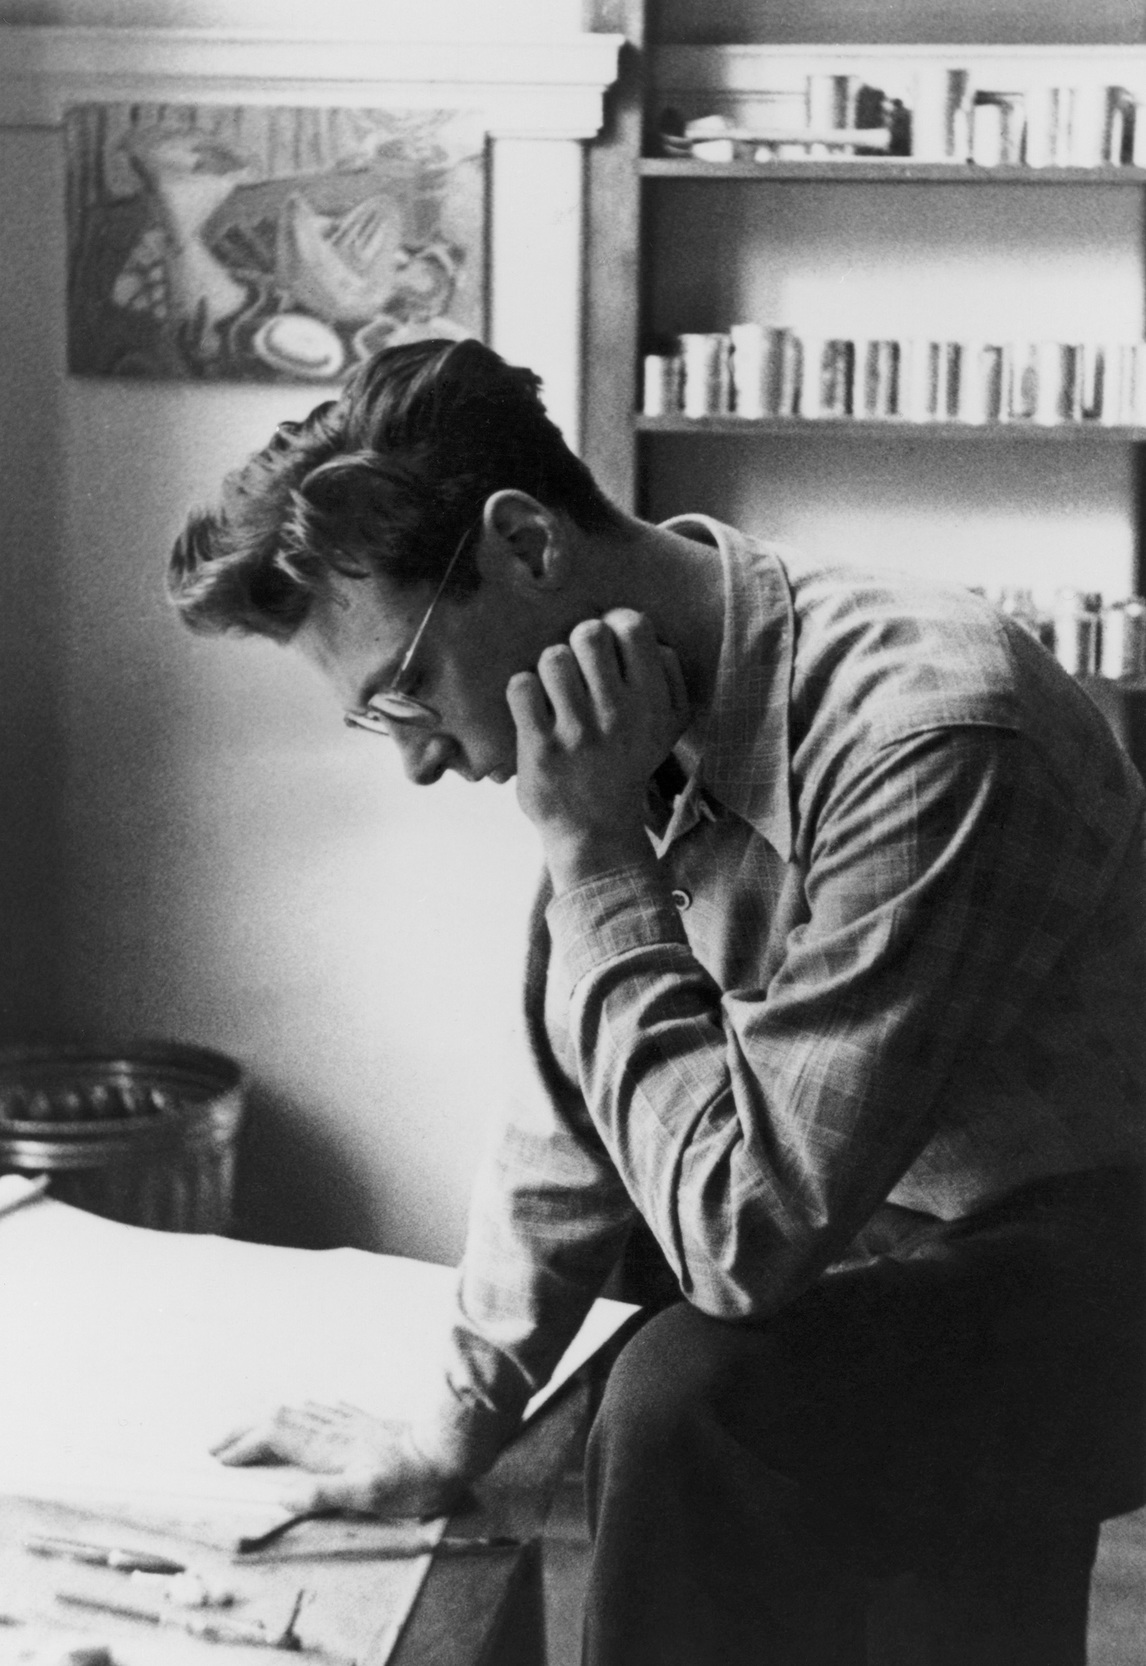 Paterson Ewen examining drawings, 1948